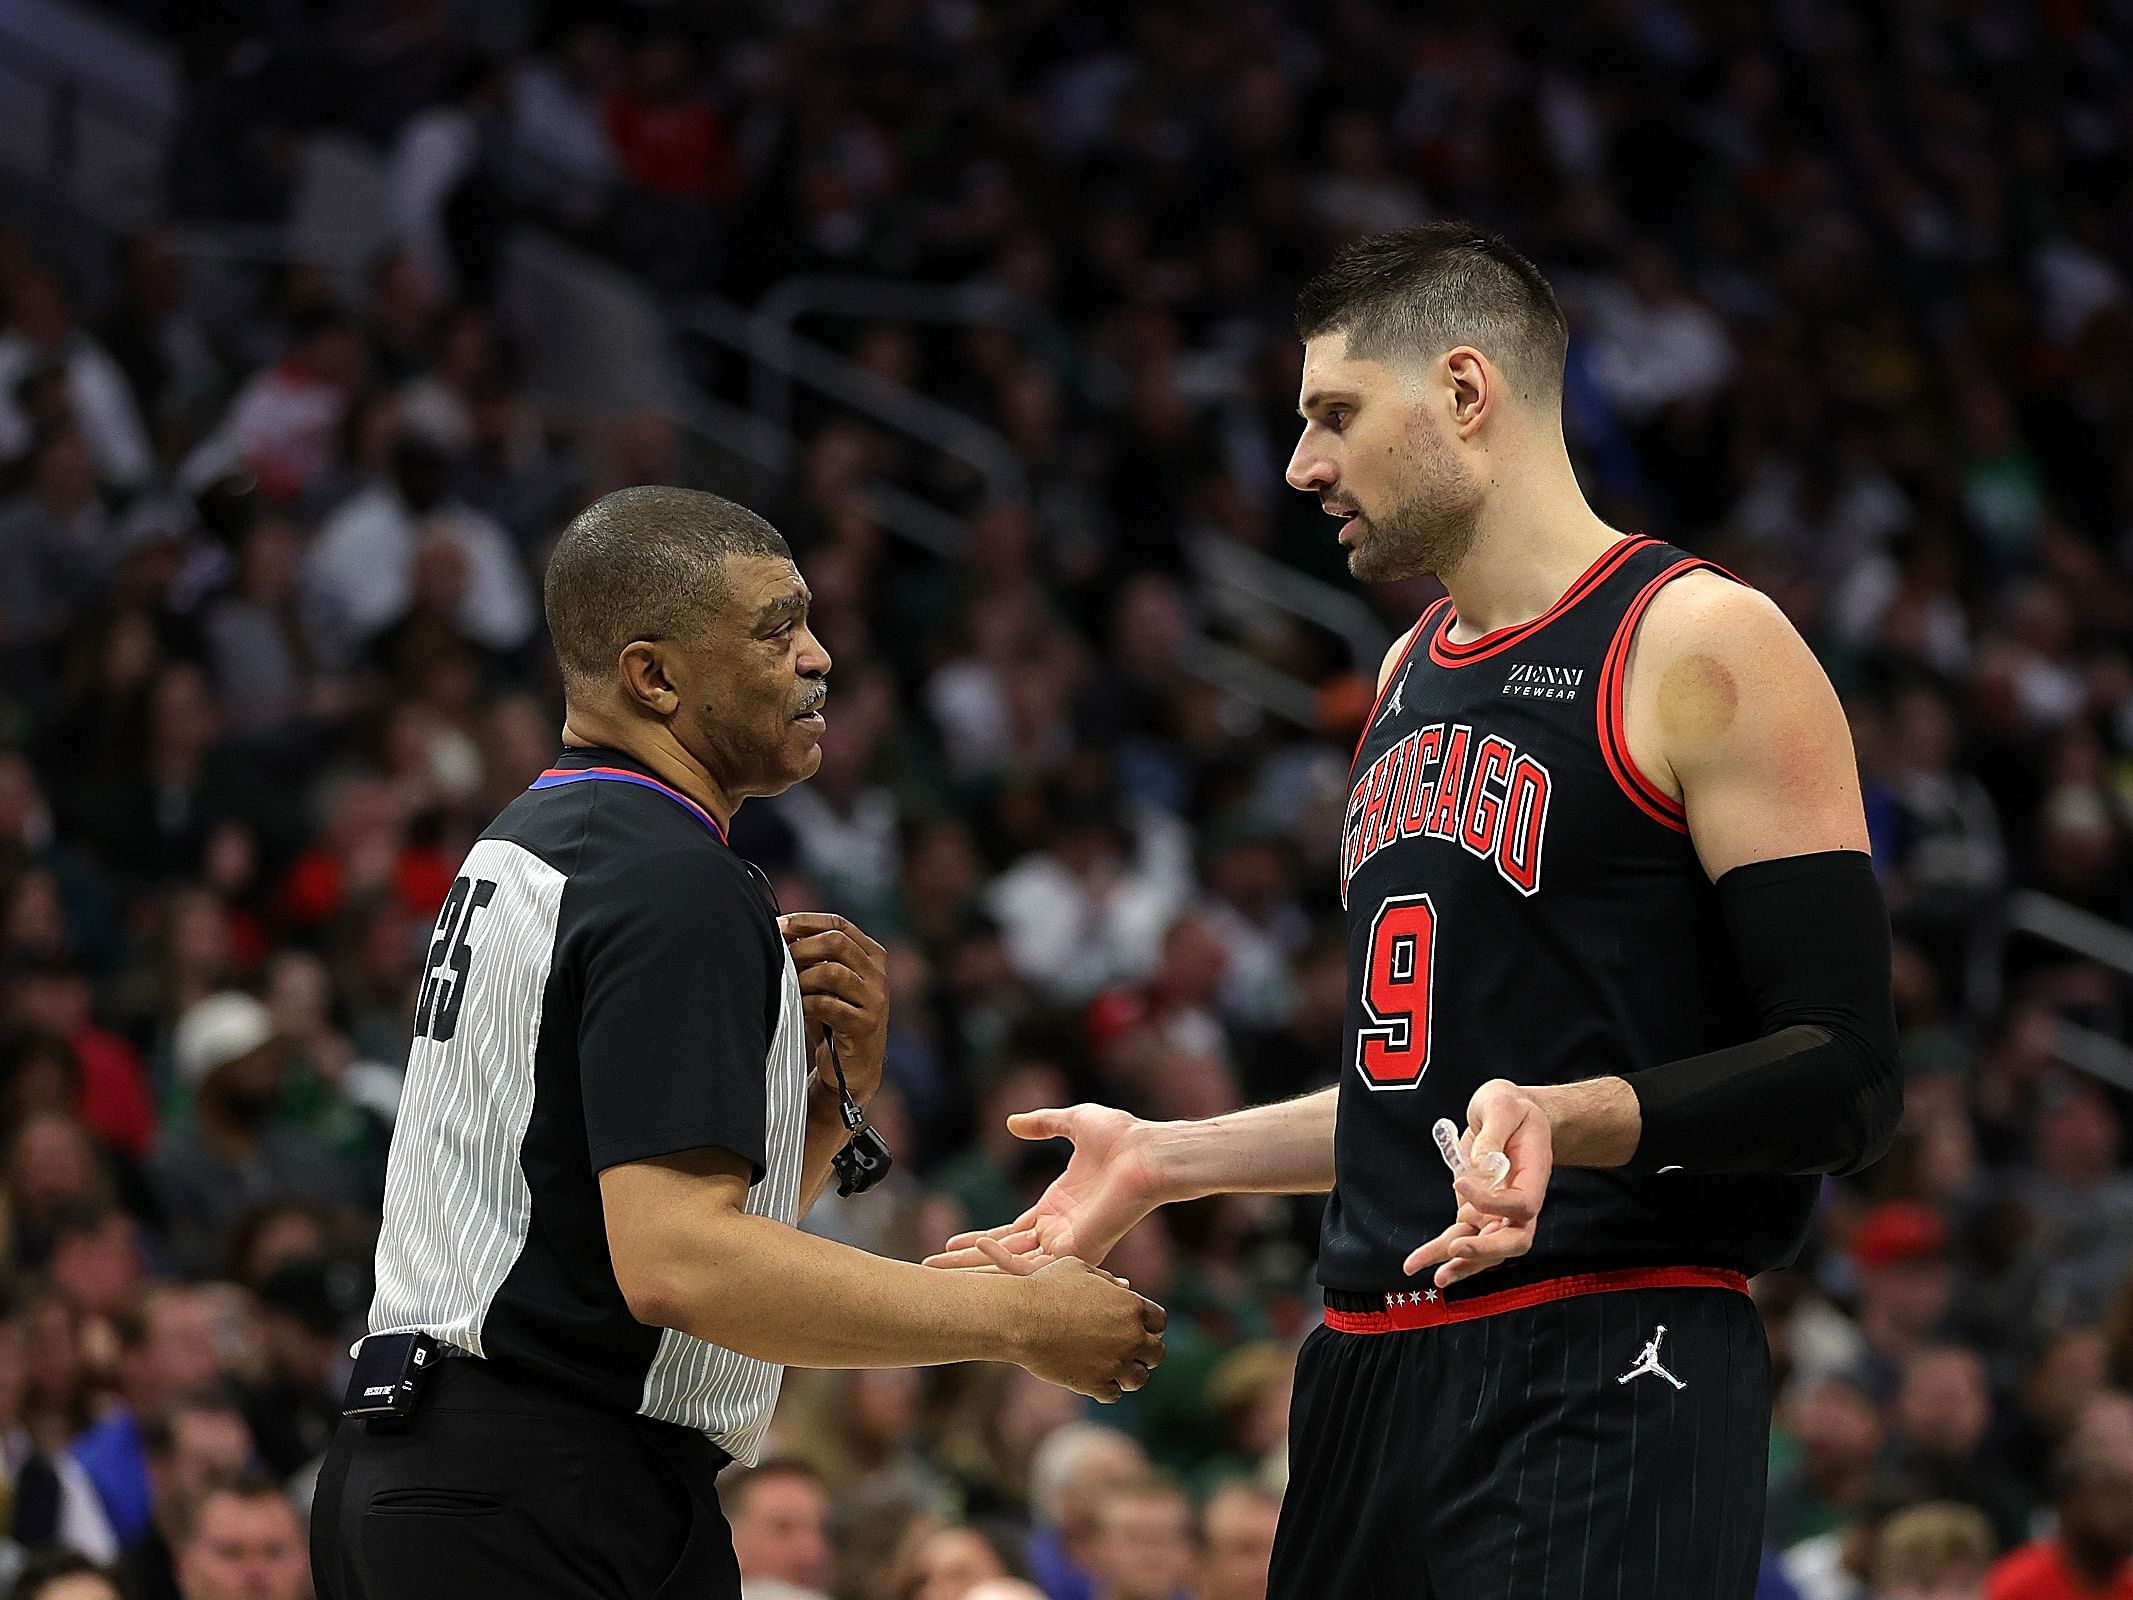 NBA referee Tony Brothers and Nikola Vucevic of the Chicago Bulls